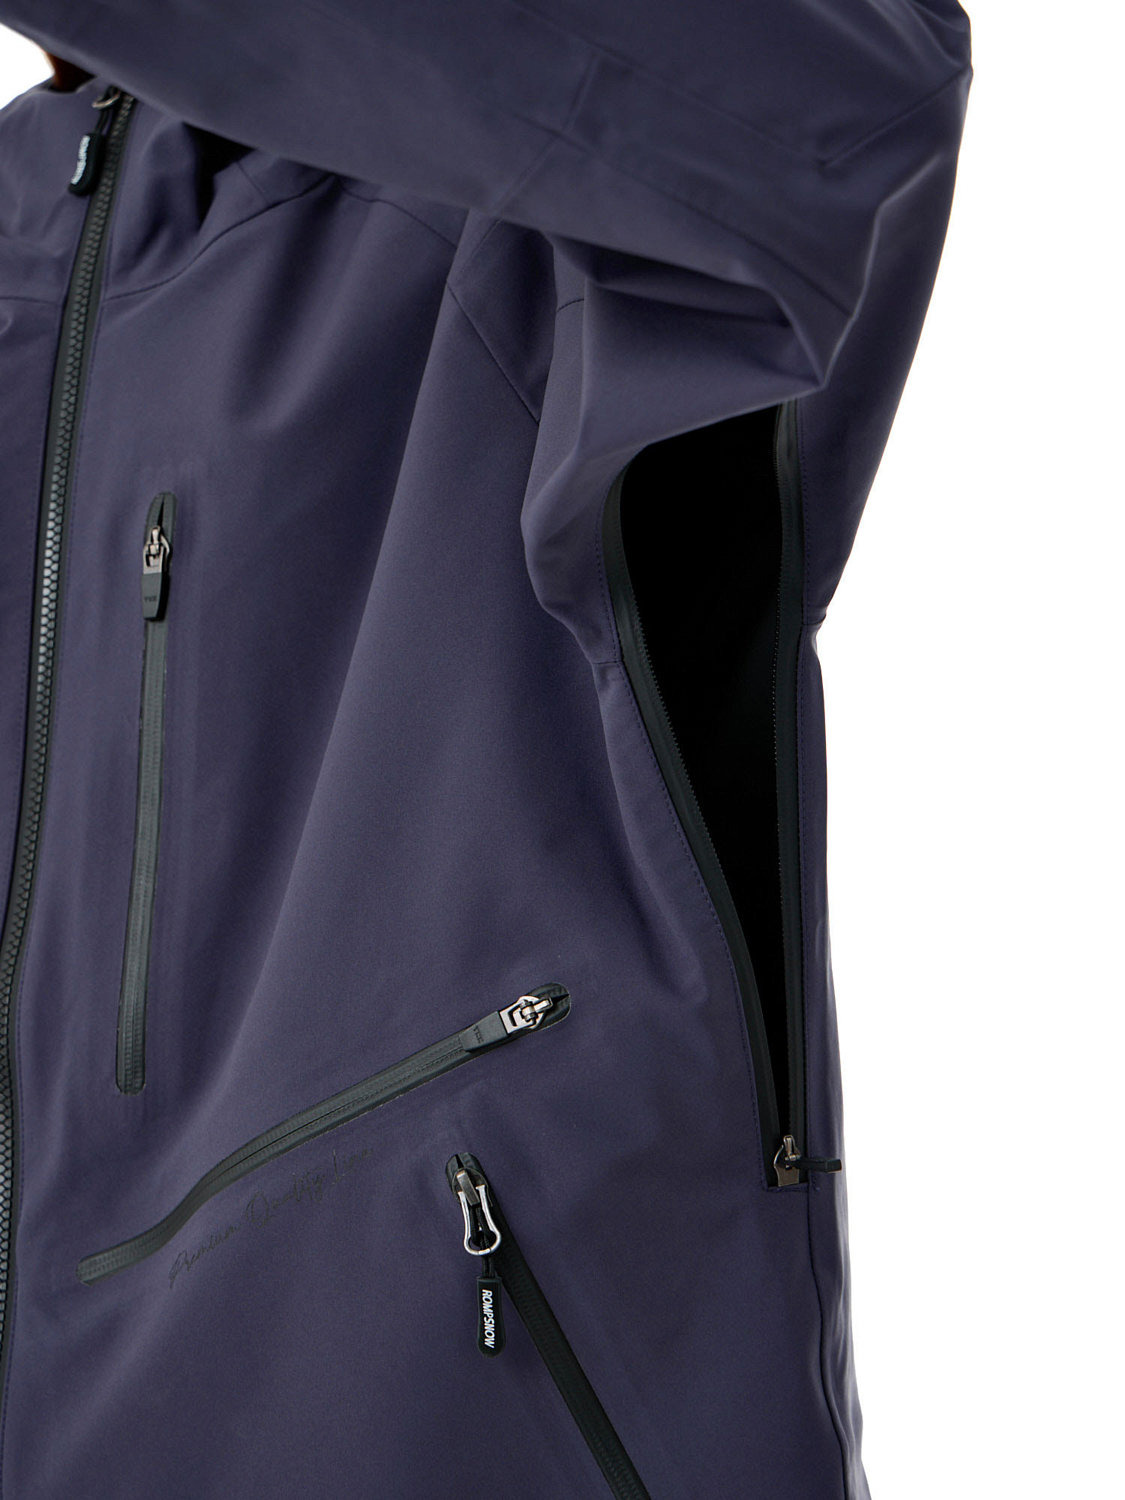 Куртка сноубордическая ROMP R2 Pro Jacket W Deep Purple